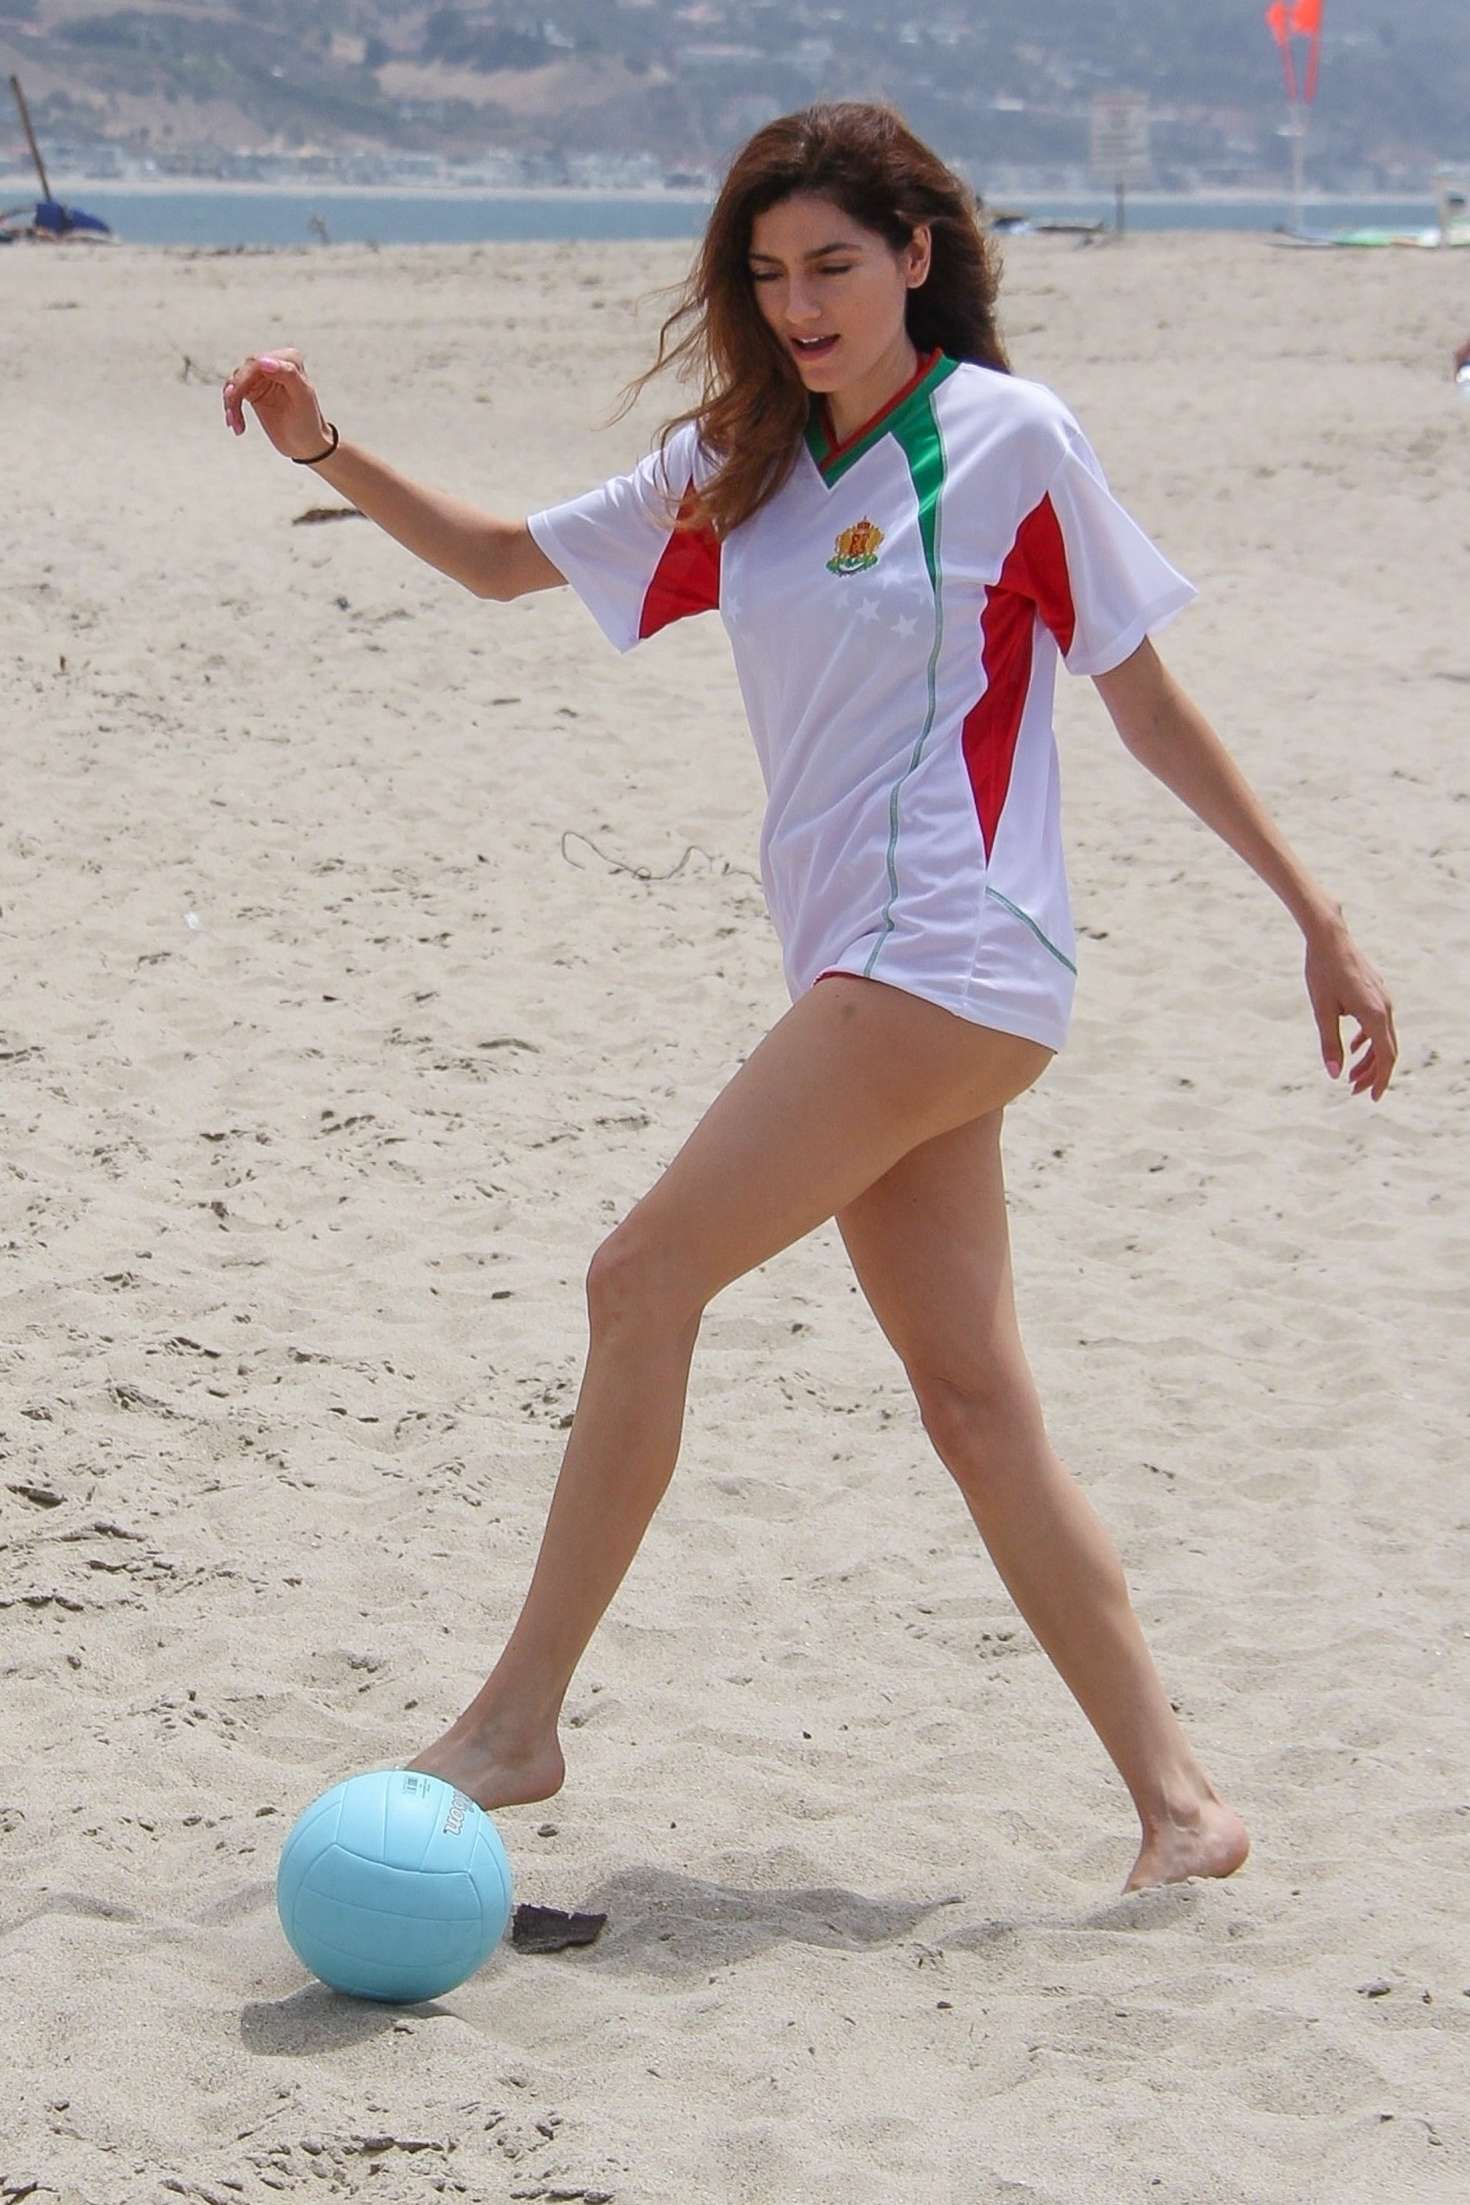 Blanca Blanco in Red Shorts on the beach in Malibu